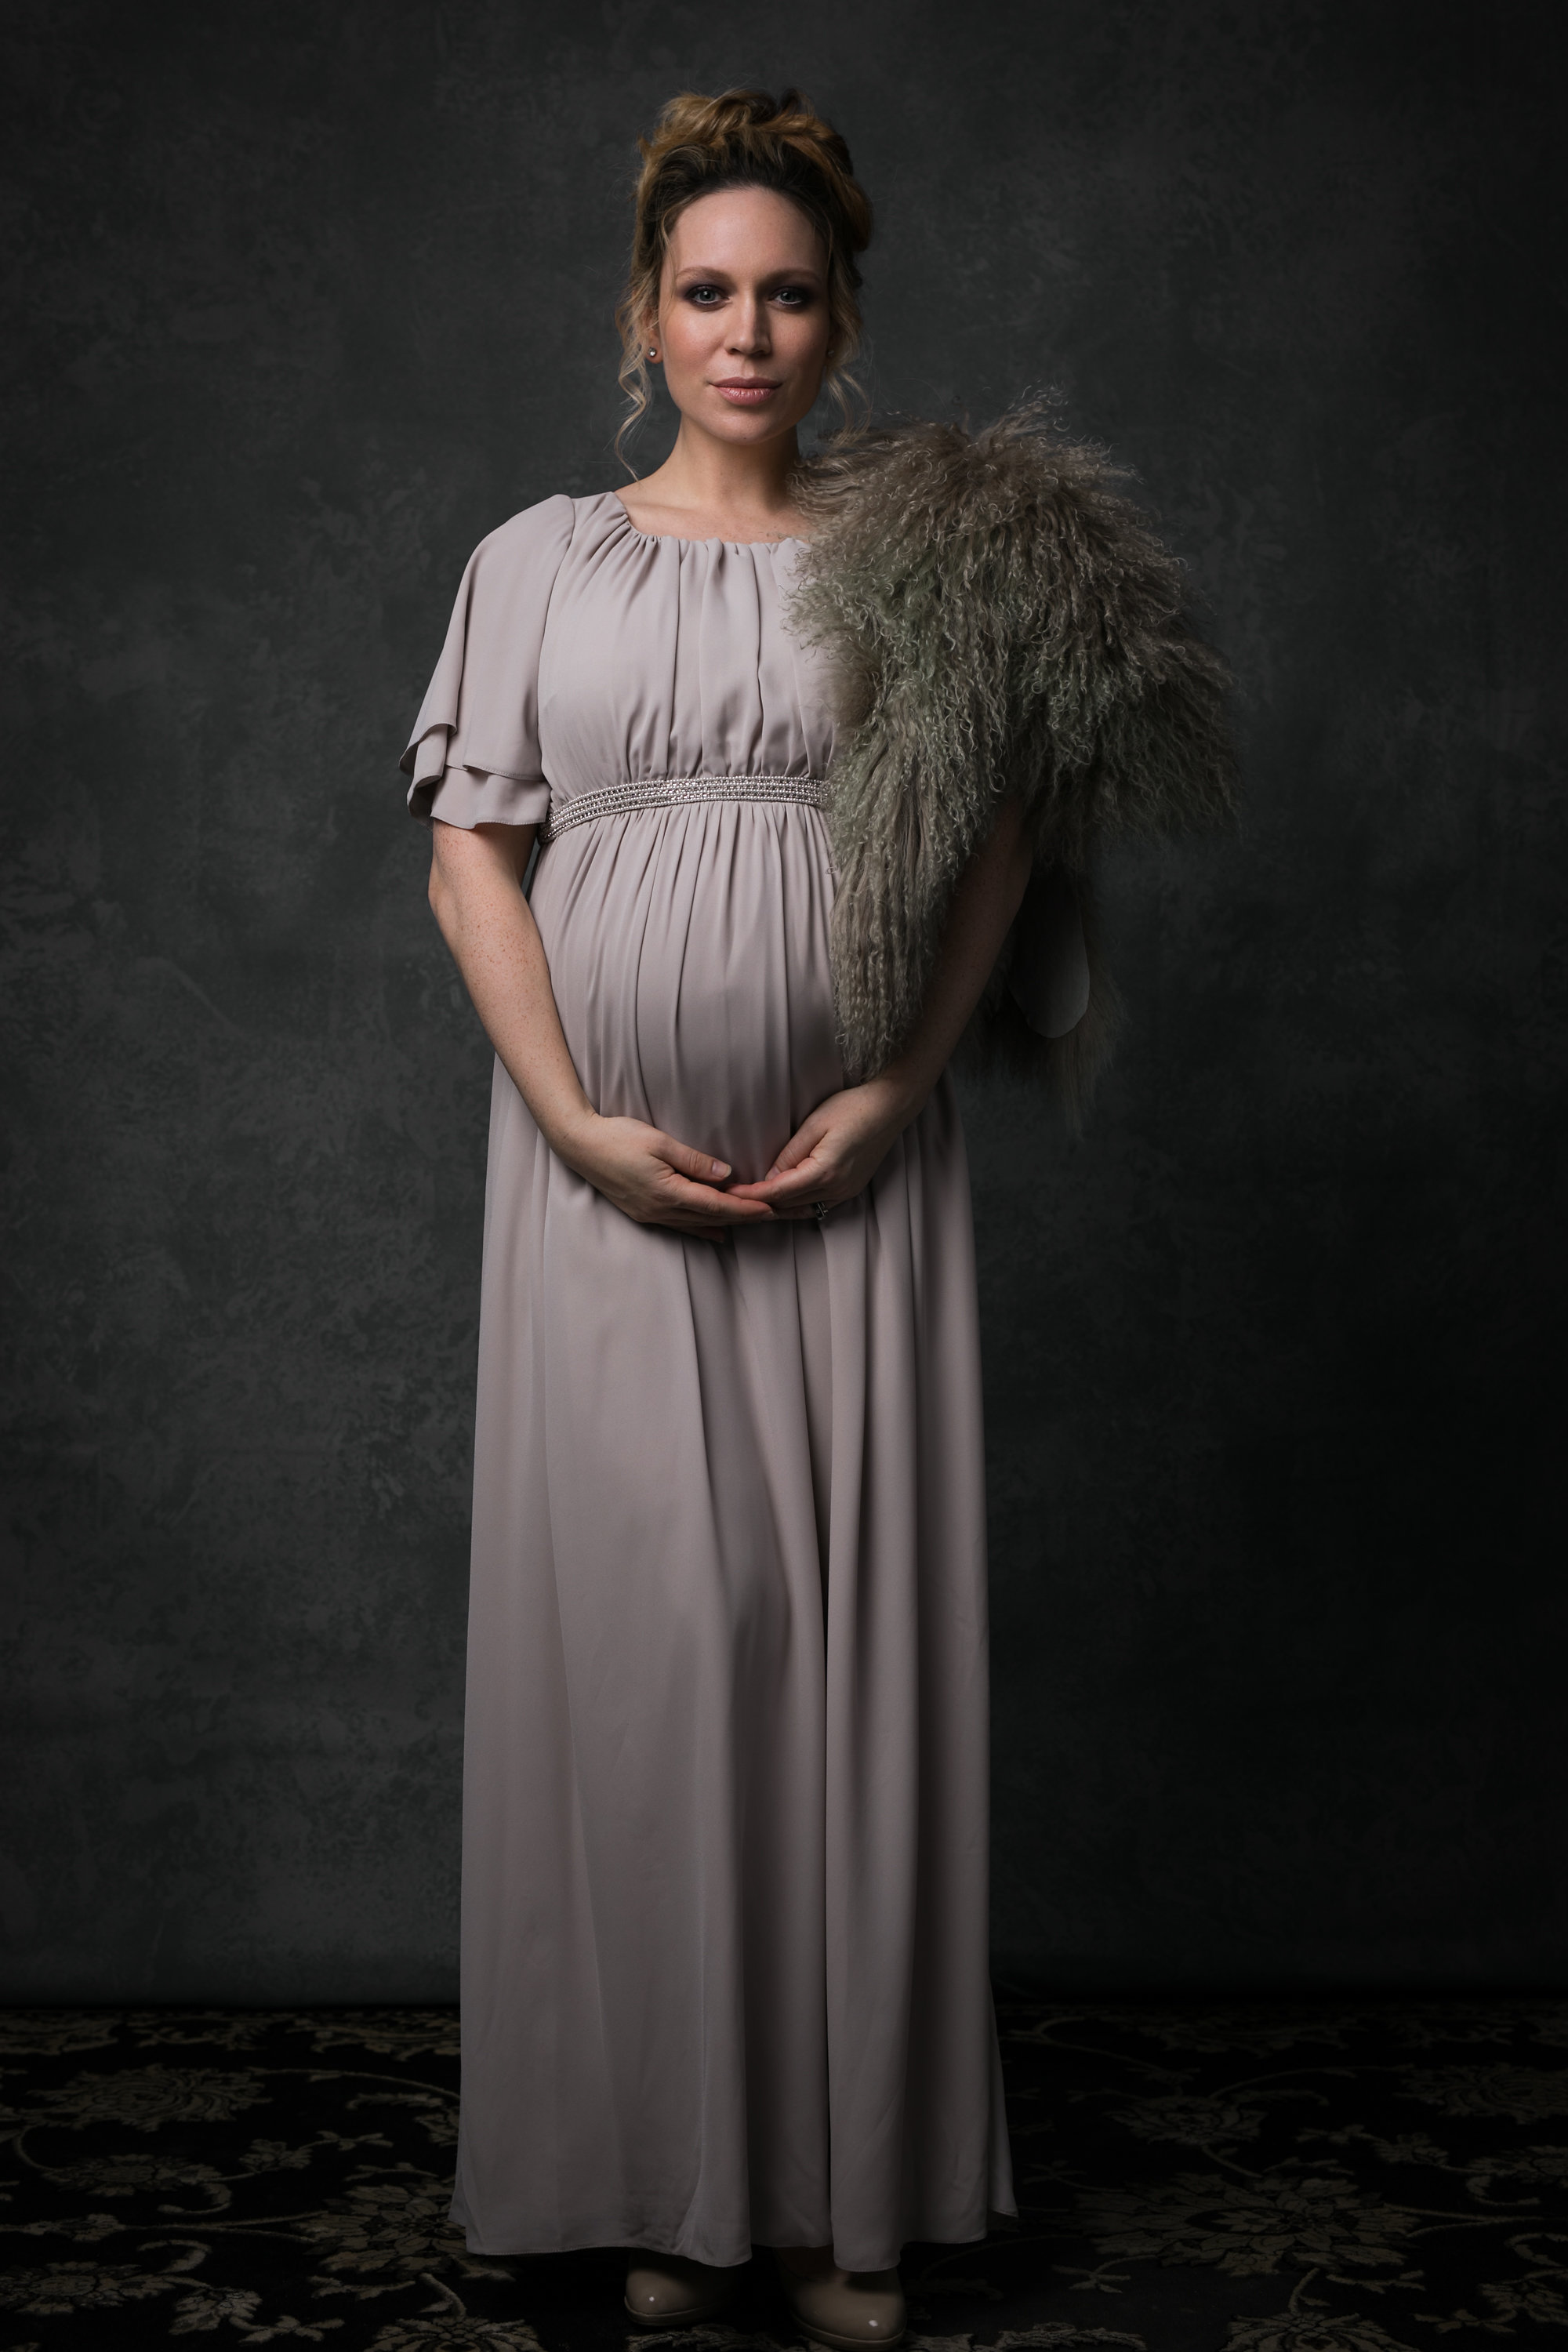 editorial maternity nicole romanoff photography 2.jpg